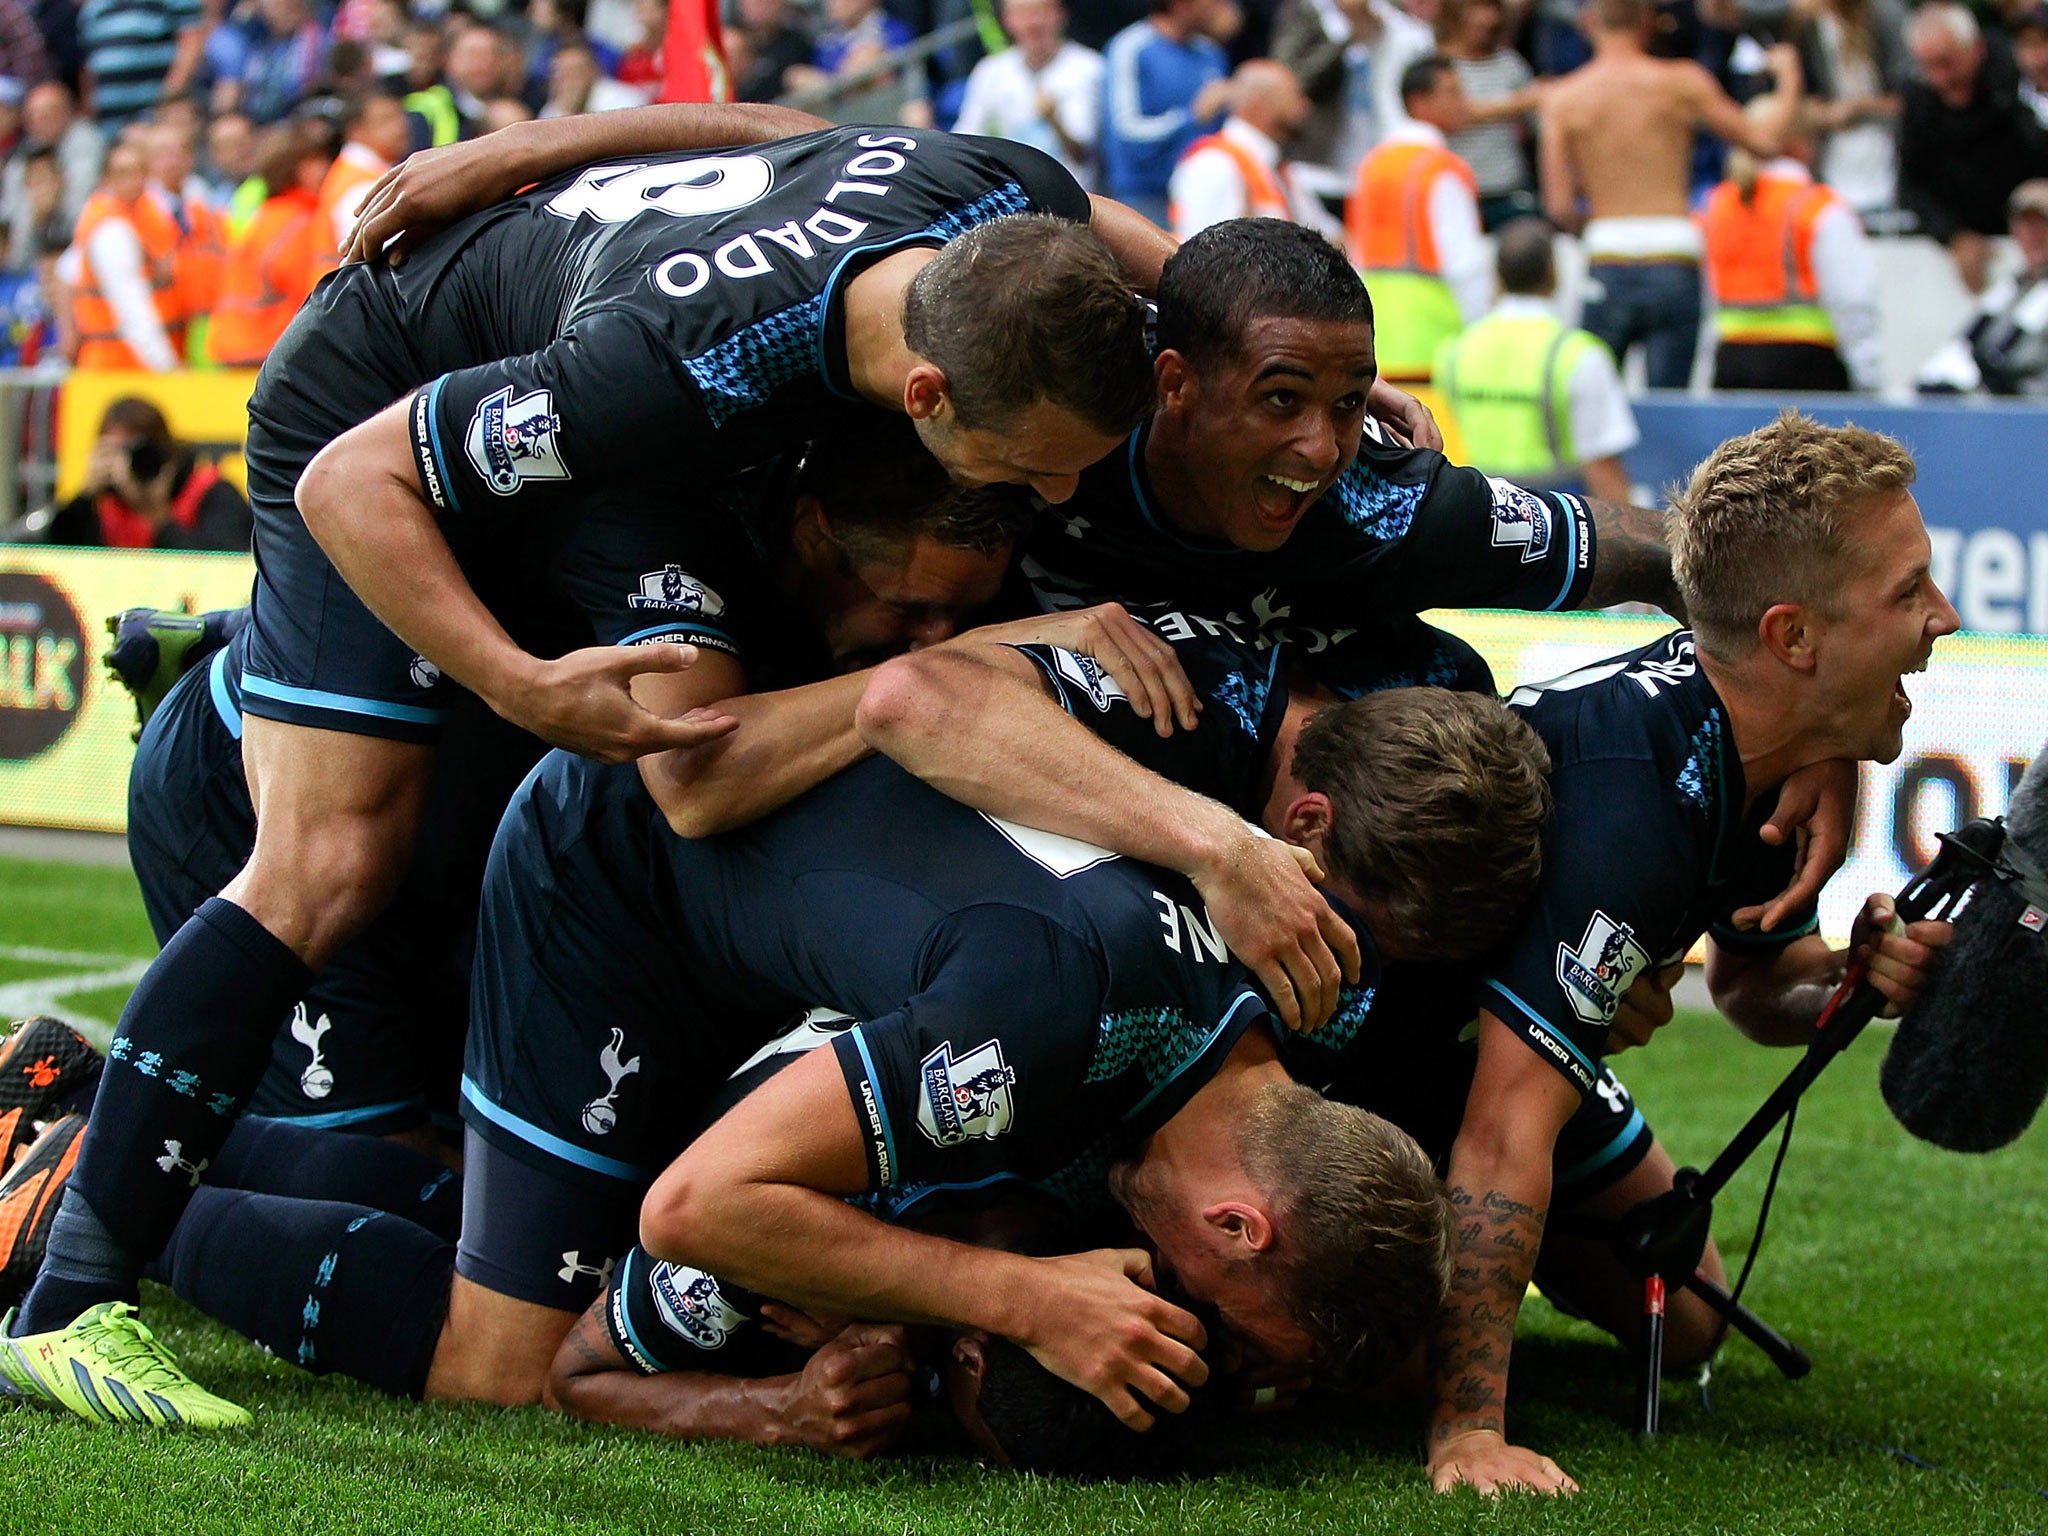 Tottenham celebrate a late winner in the Premier League against Cardiff City